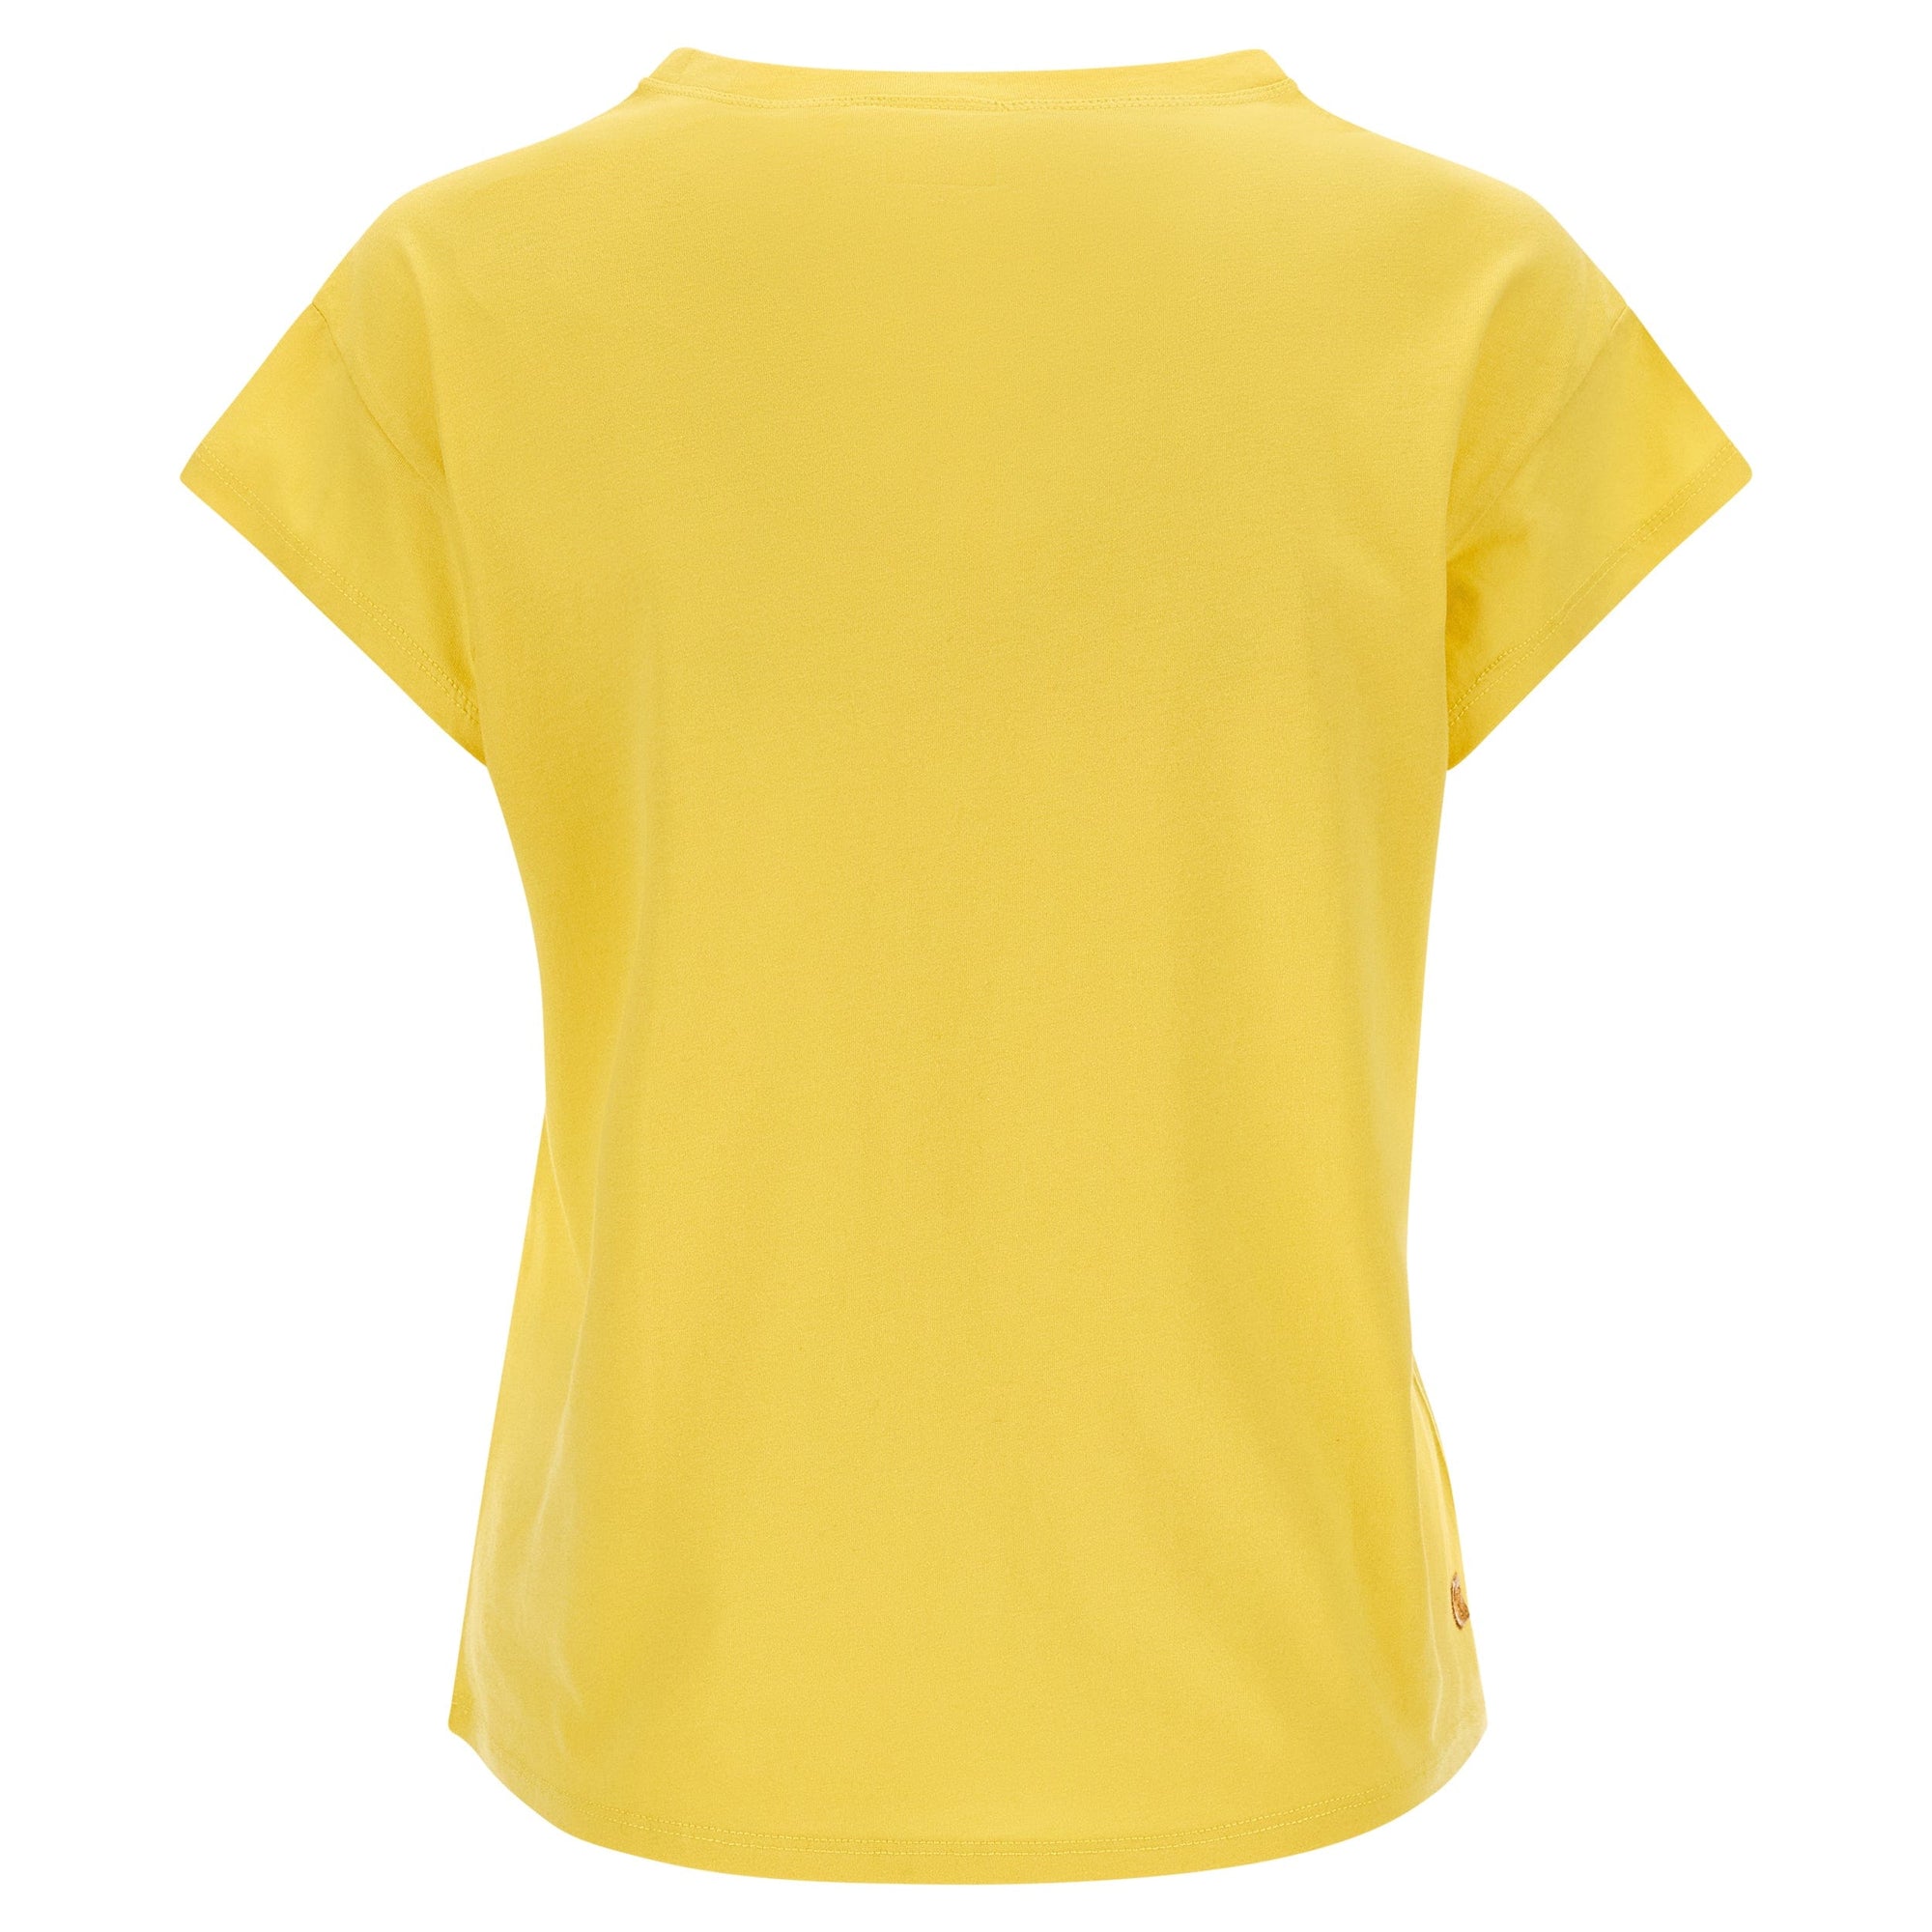 T Shirt with Ultrashort Sleeves - Yellow + Gold Glitter Print 2